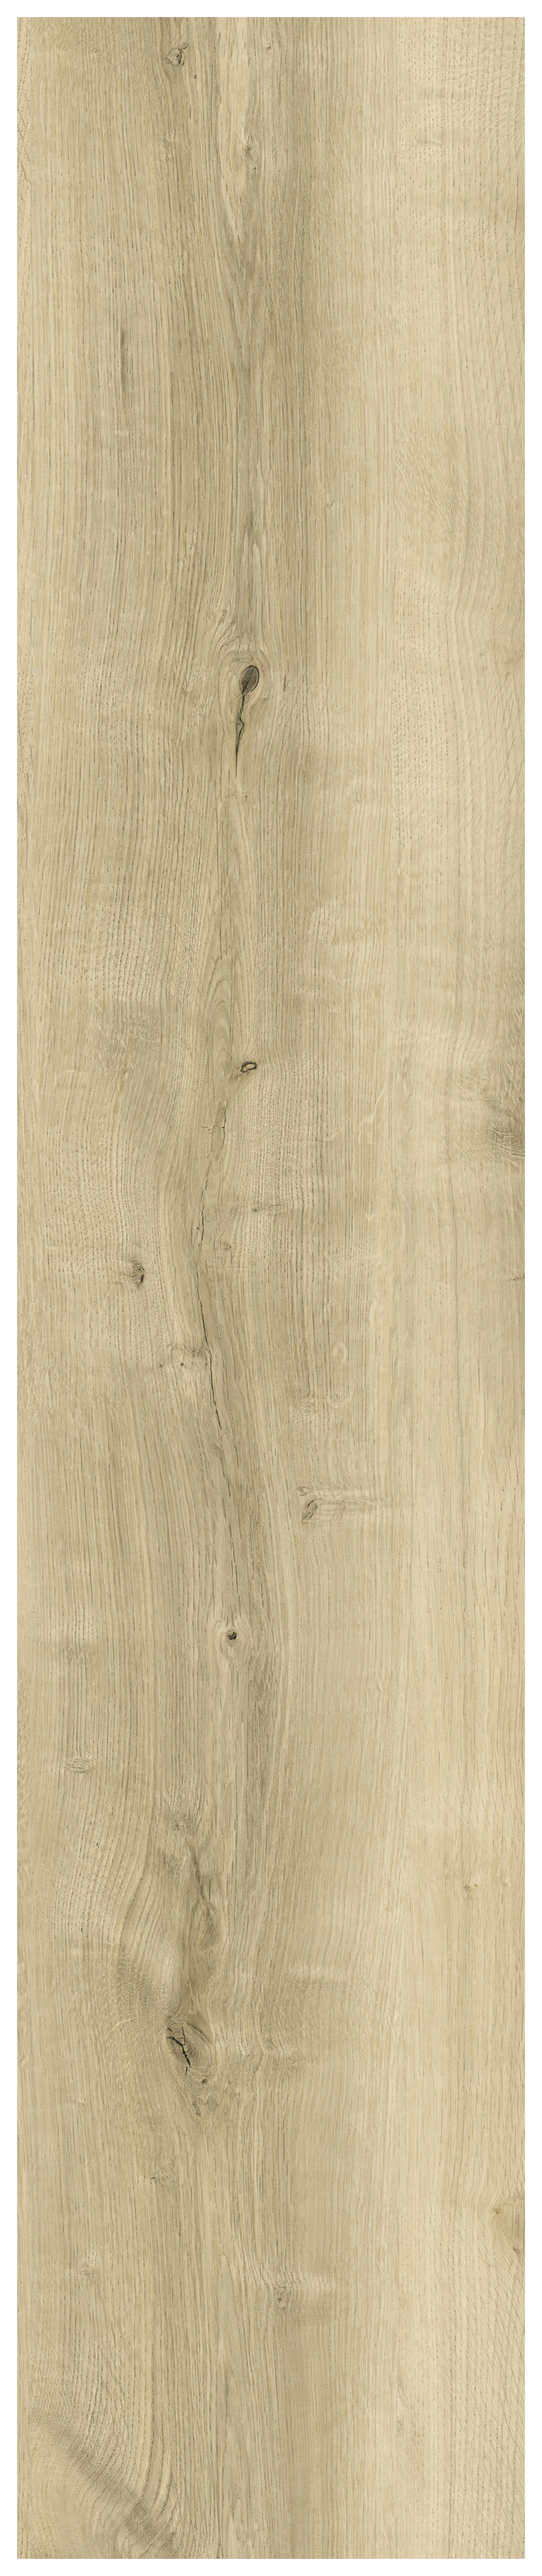 Balmoral Natural Oak Herringbone SPC Flooring with Integrated Underlay - Sample